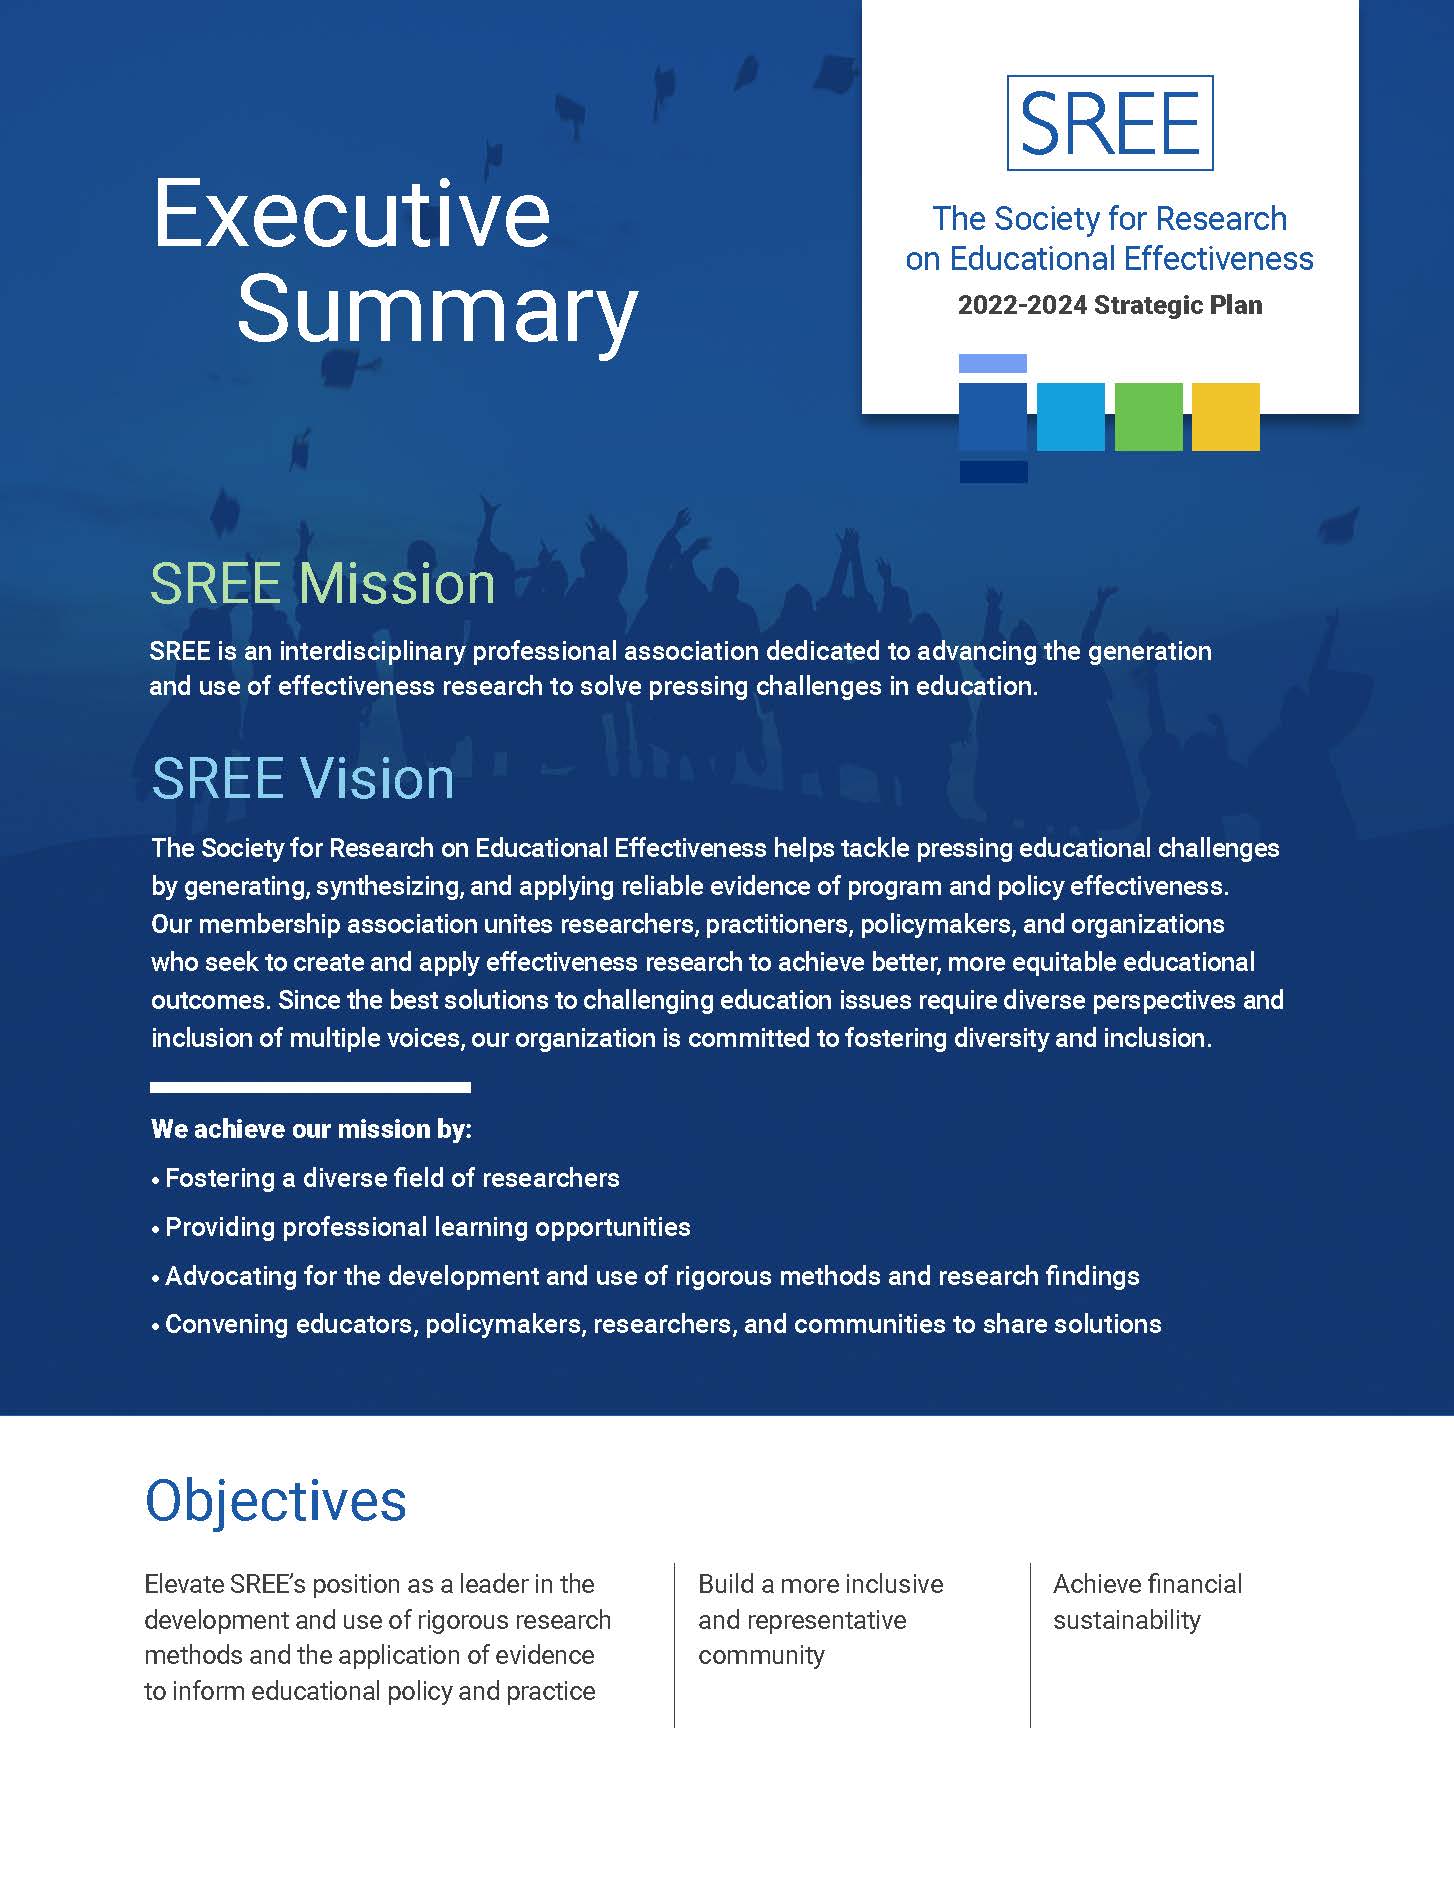 SREE 2021 Strategic Plan: Executive Summary